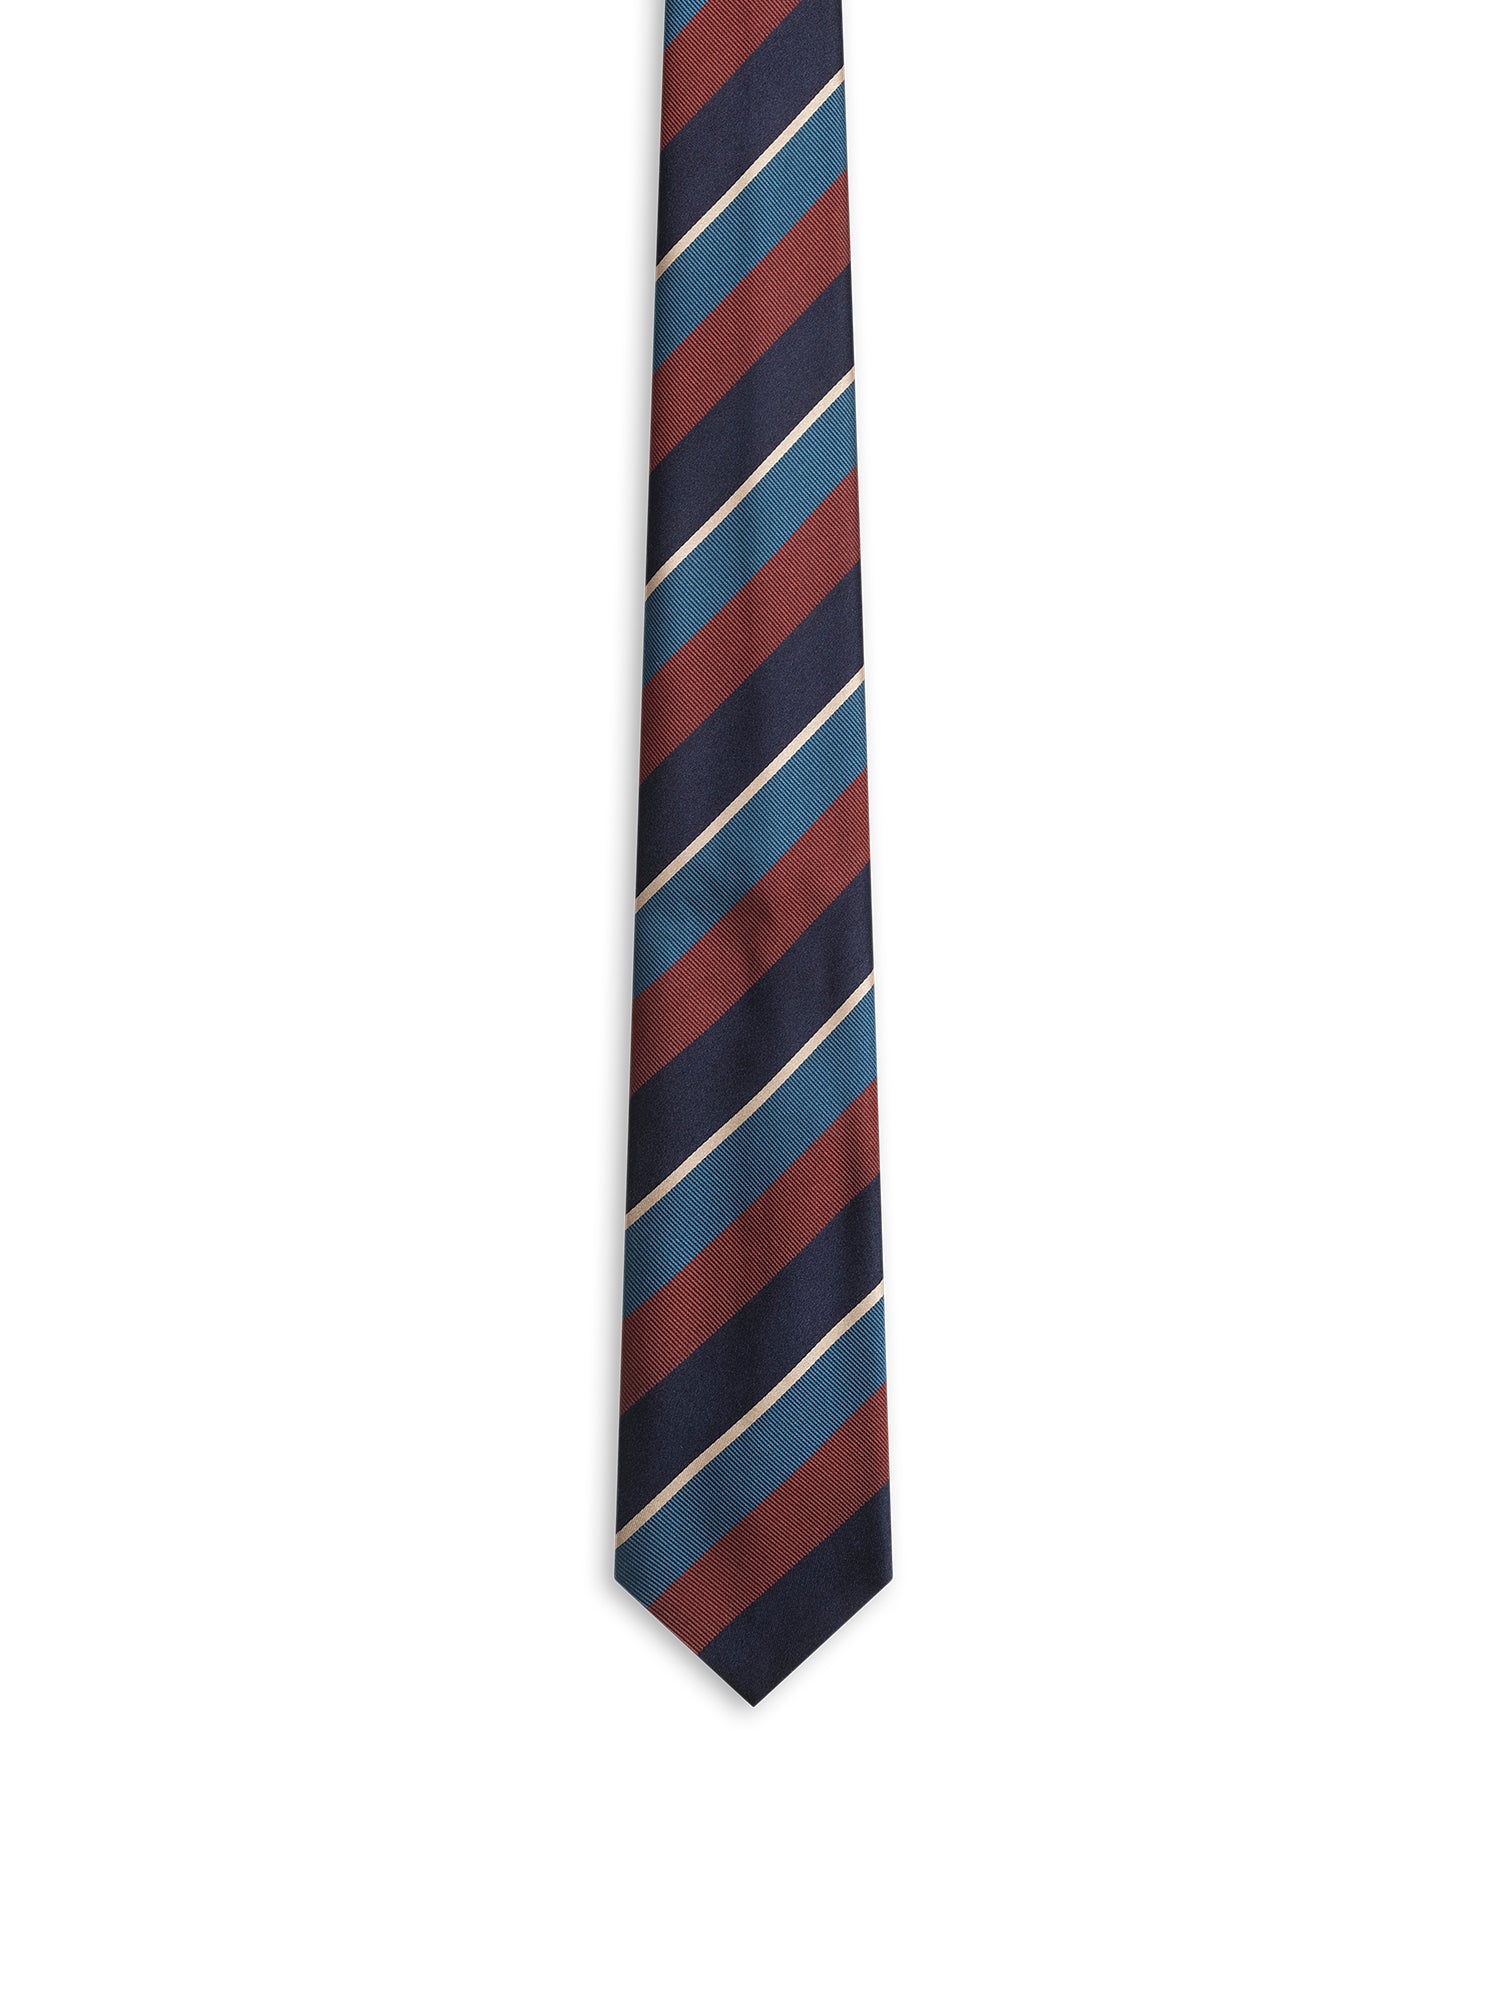 Dartmouth Tie